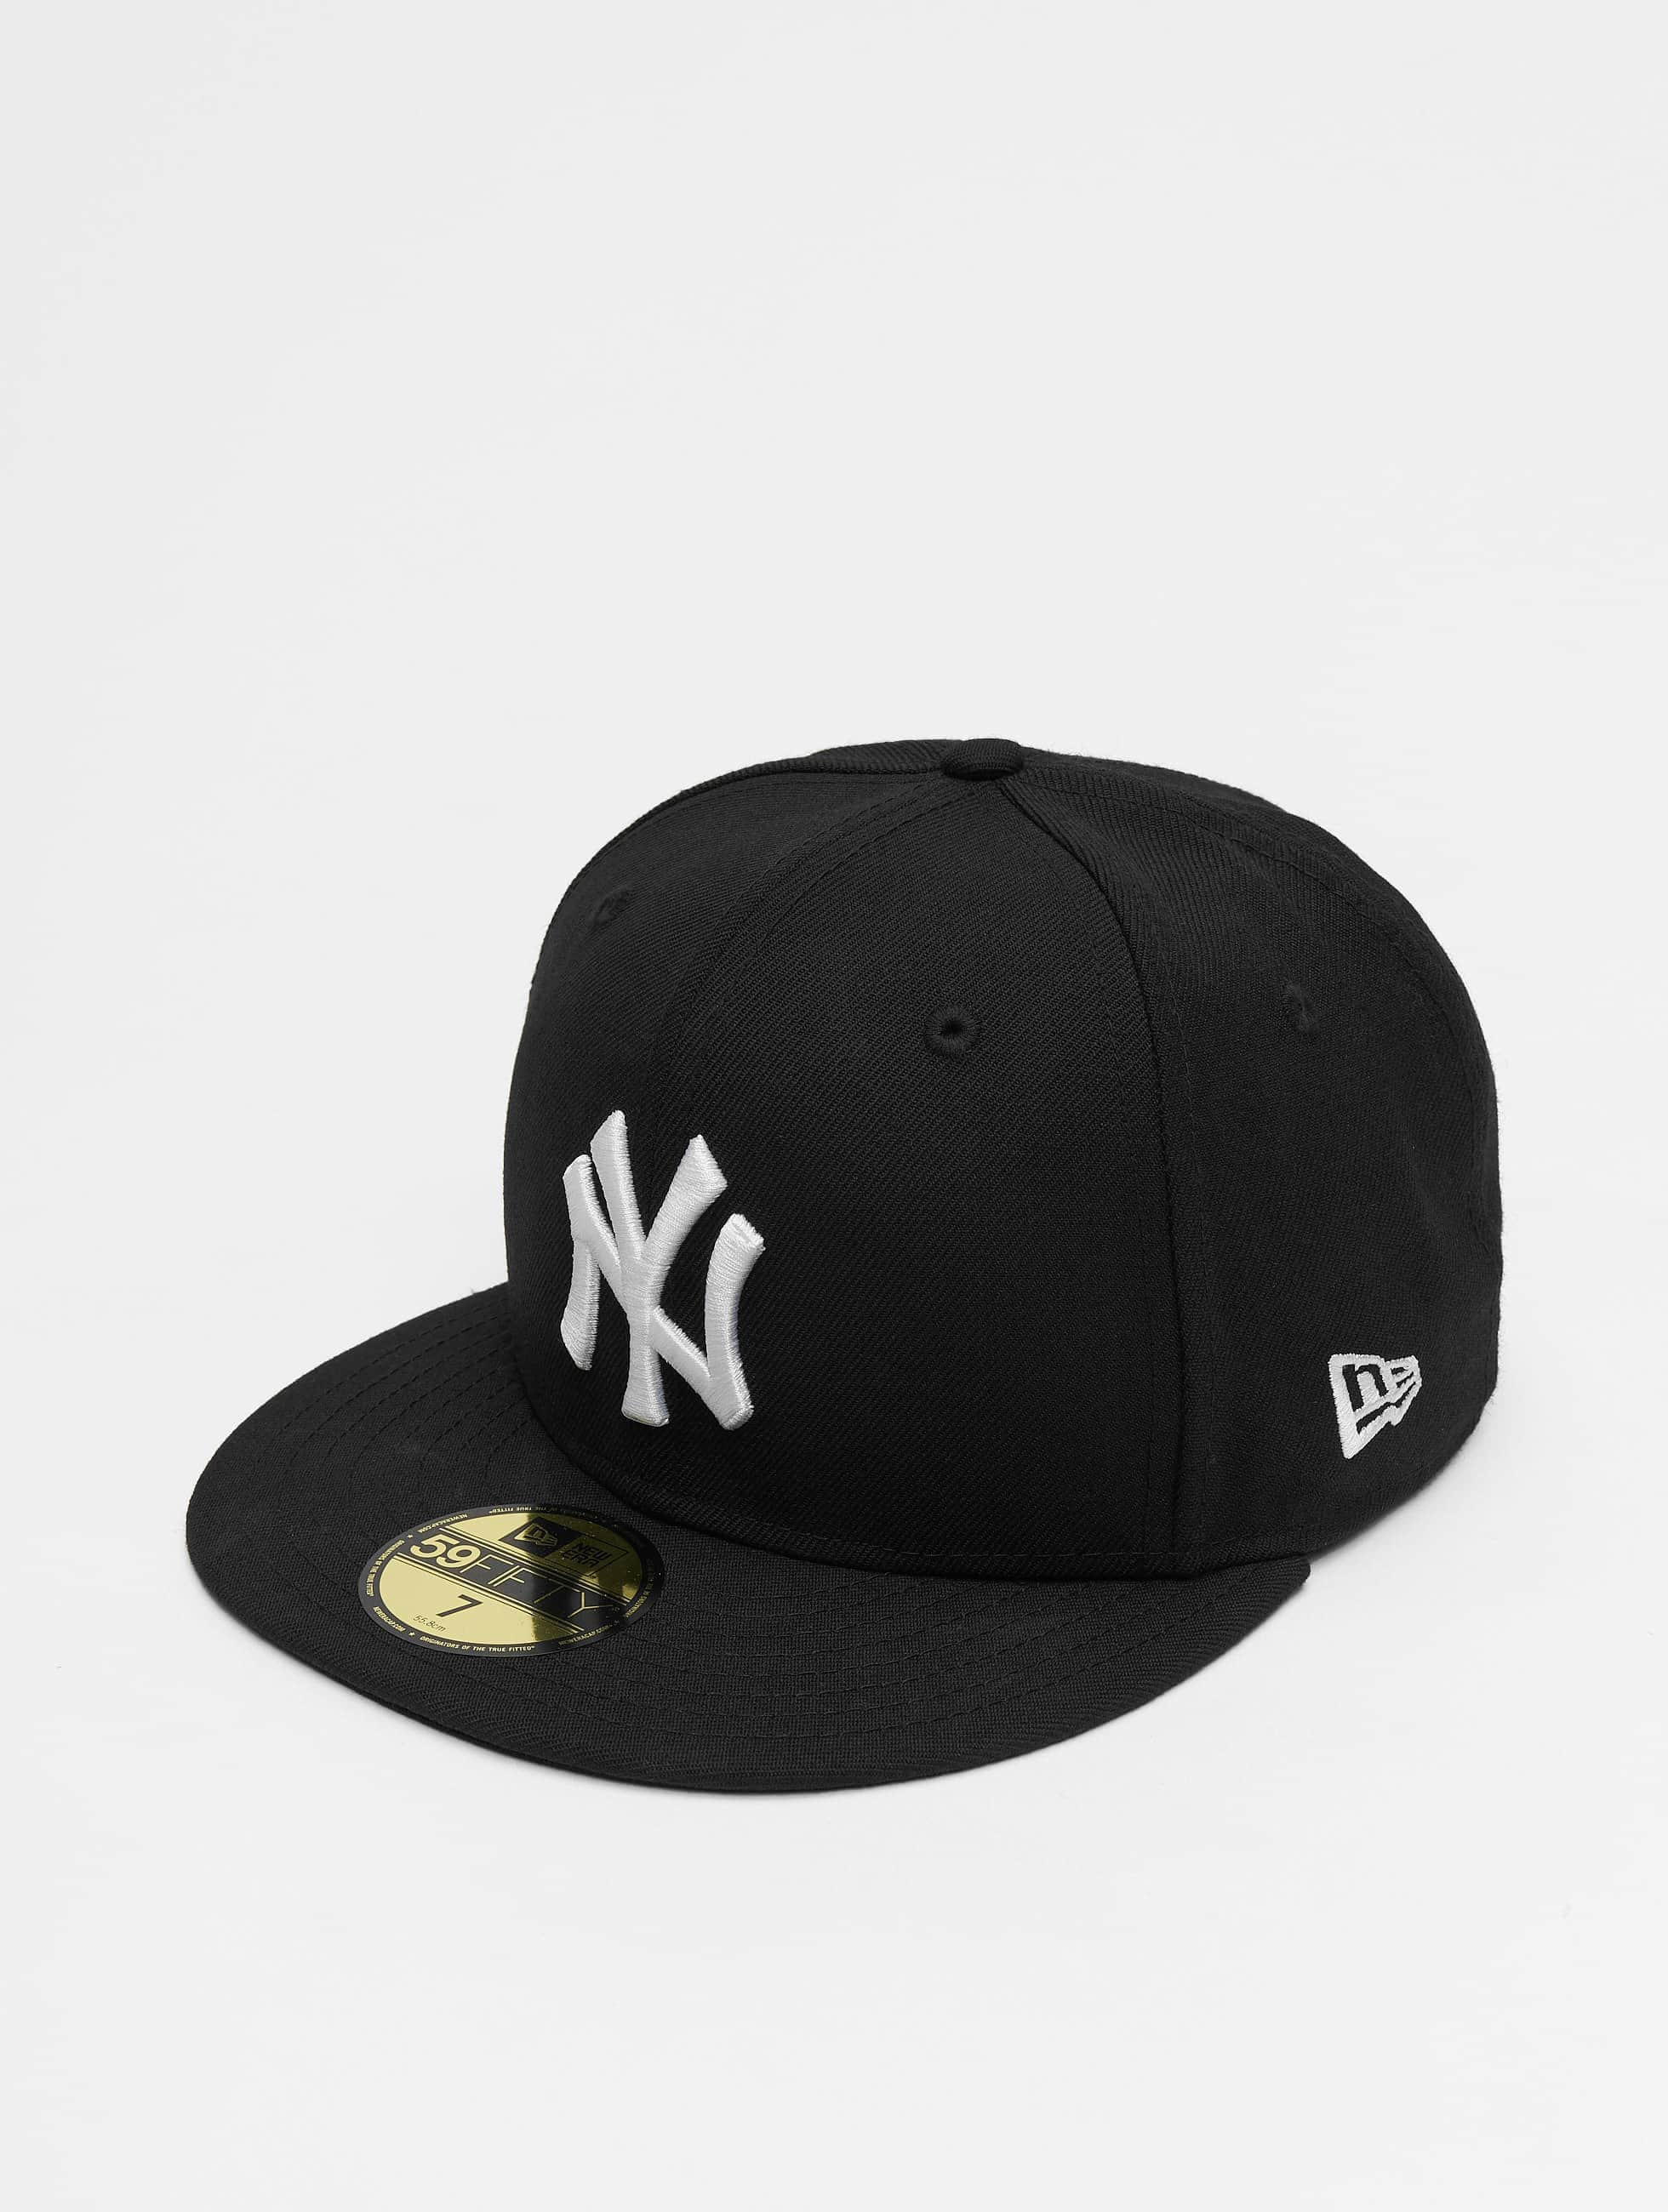 Beyond Overgang Voorafgaan New Era Cap / Fitted Cap MLB Basic NY Yankees in zwart 5238